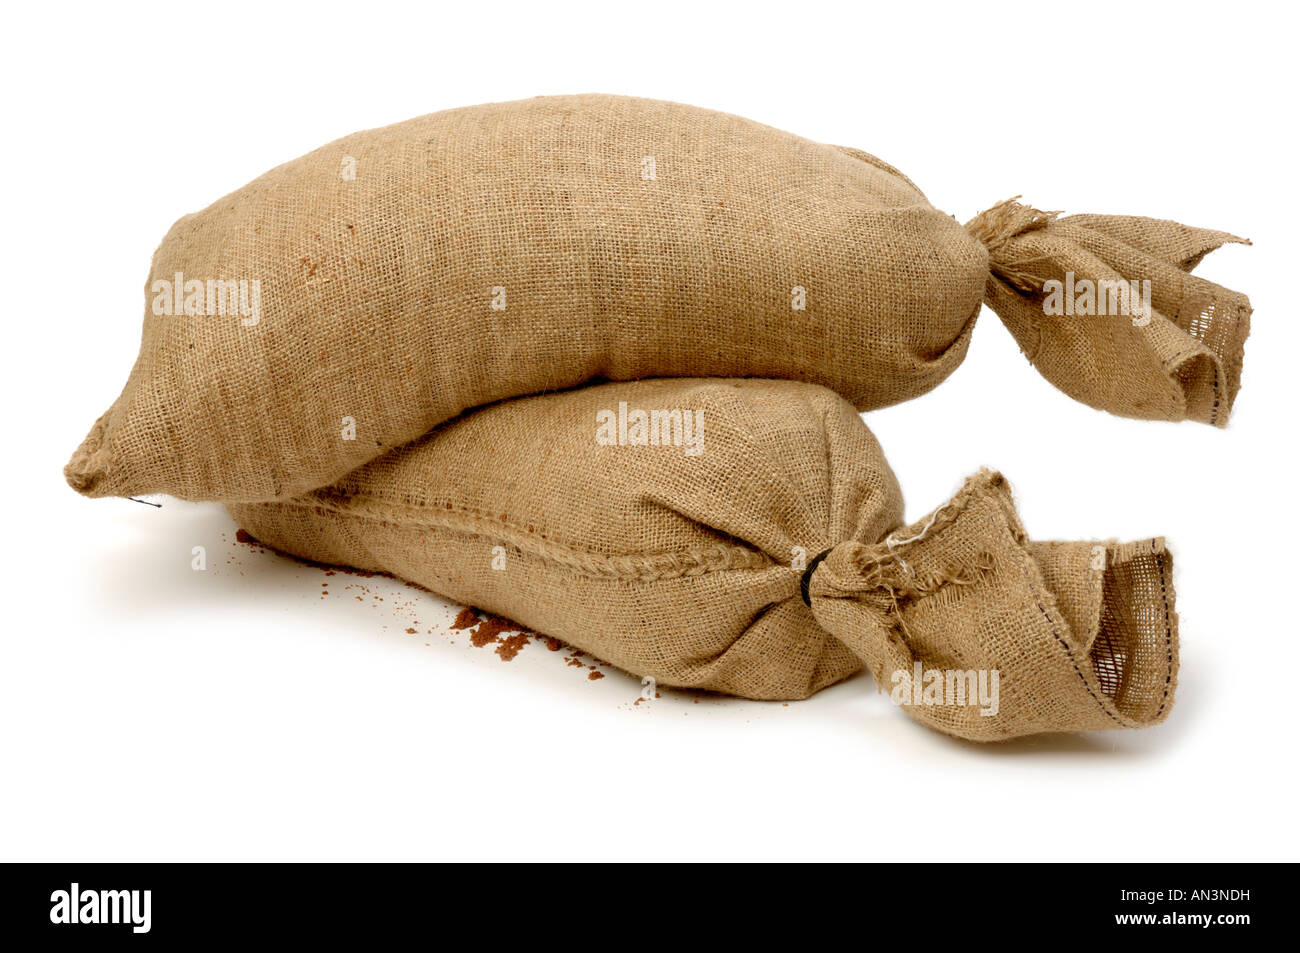 2 sand bags Stock Photo